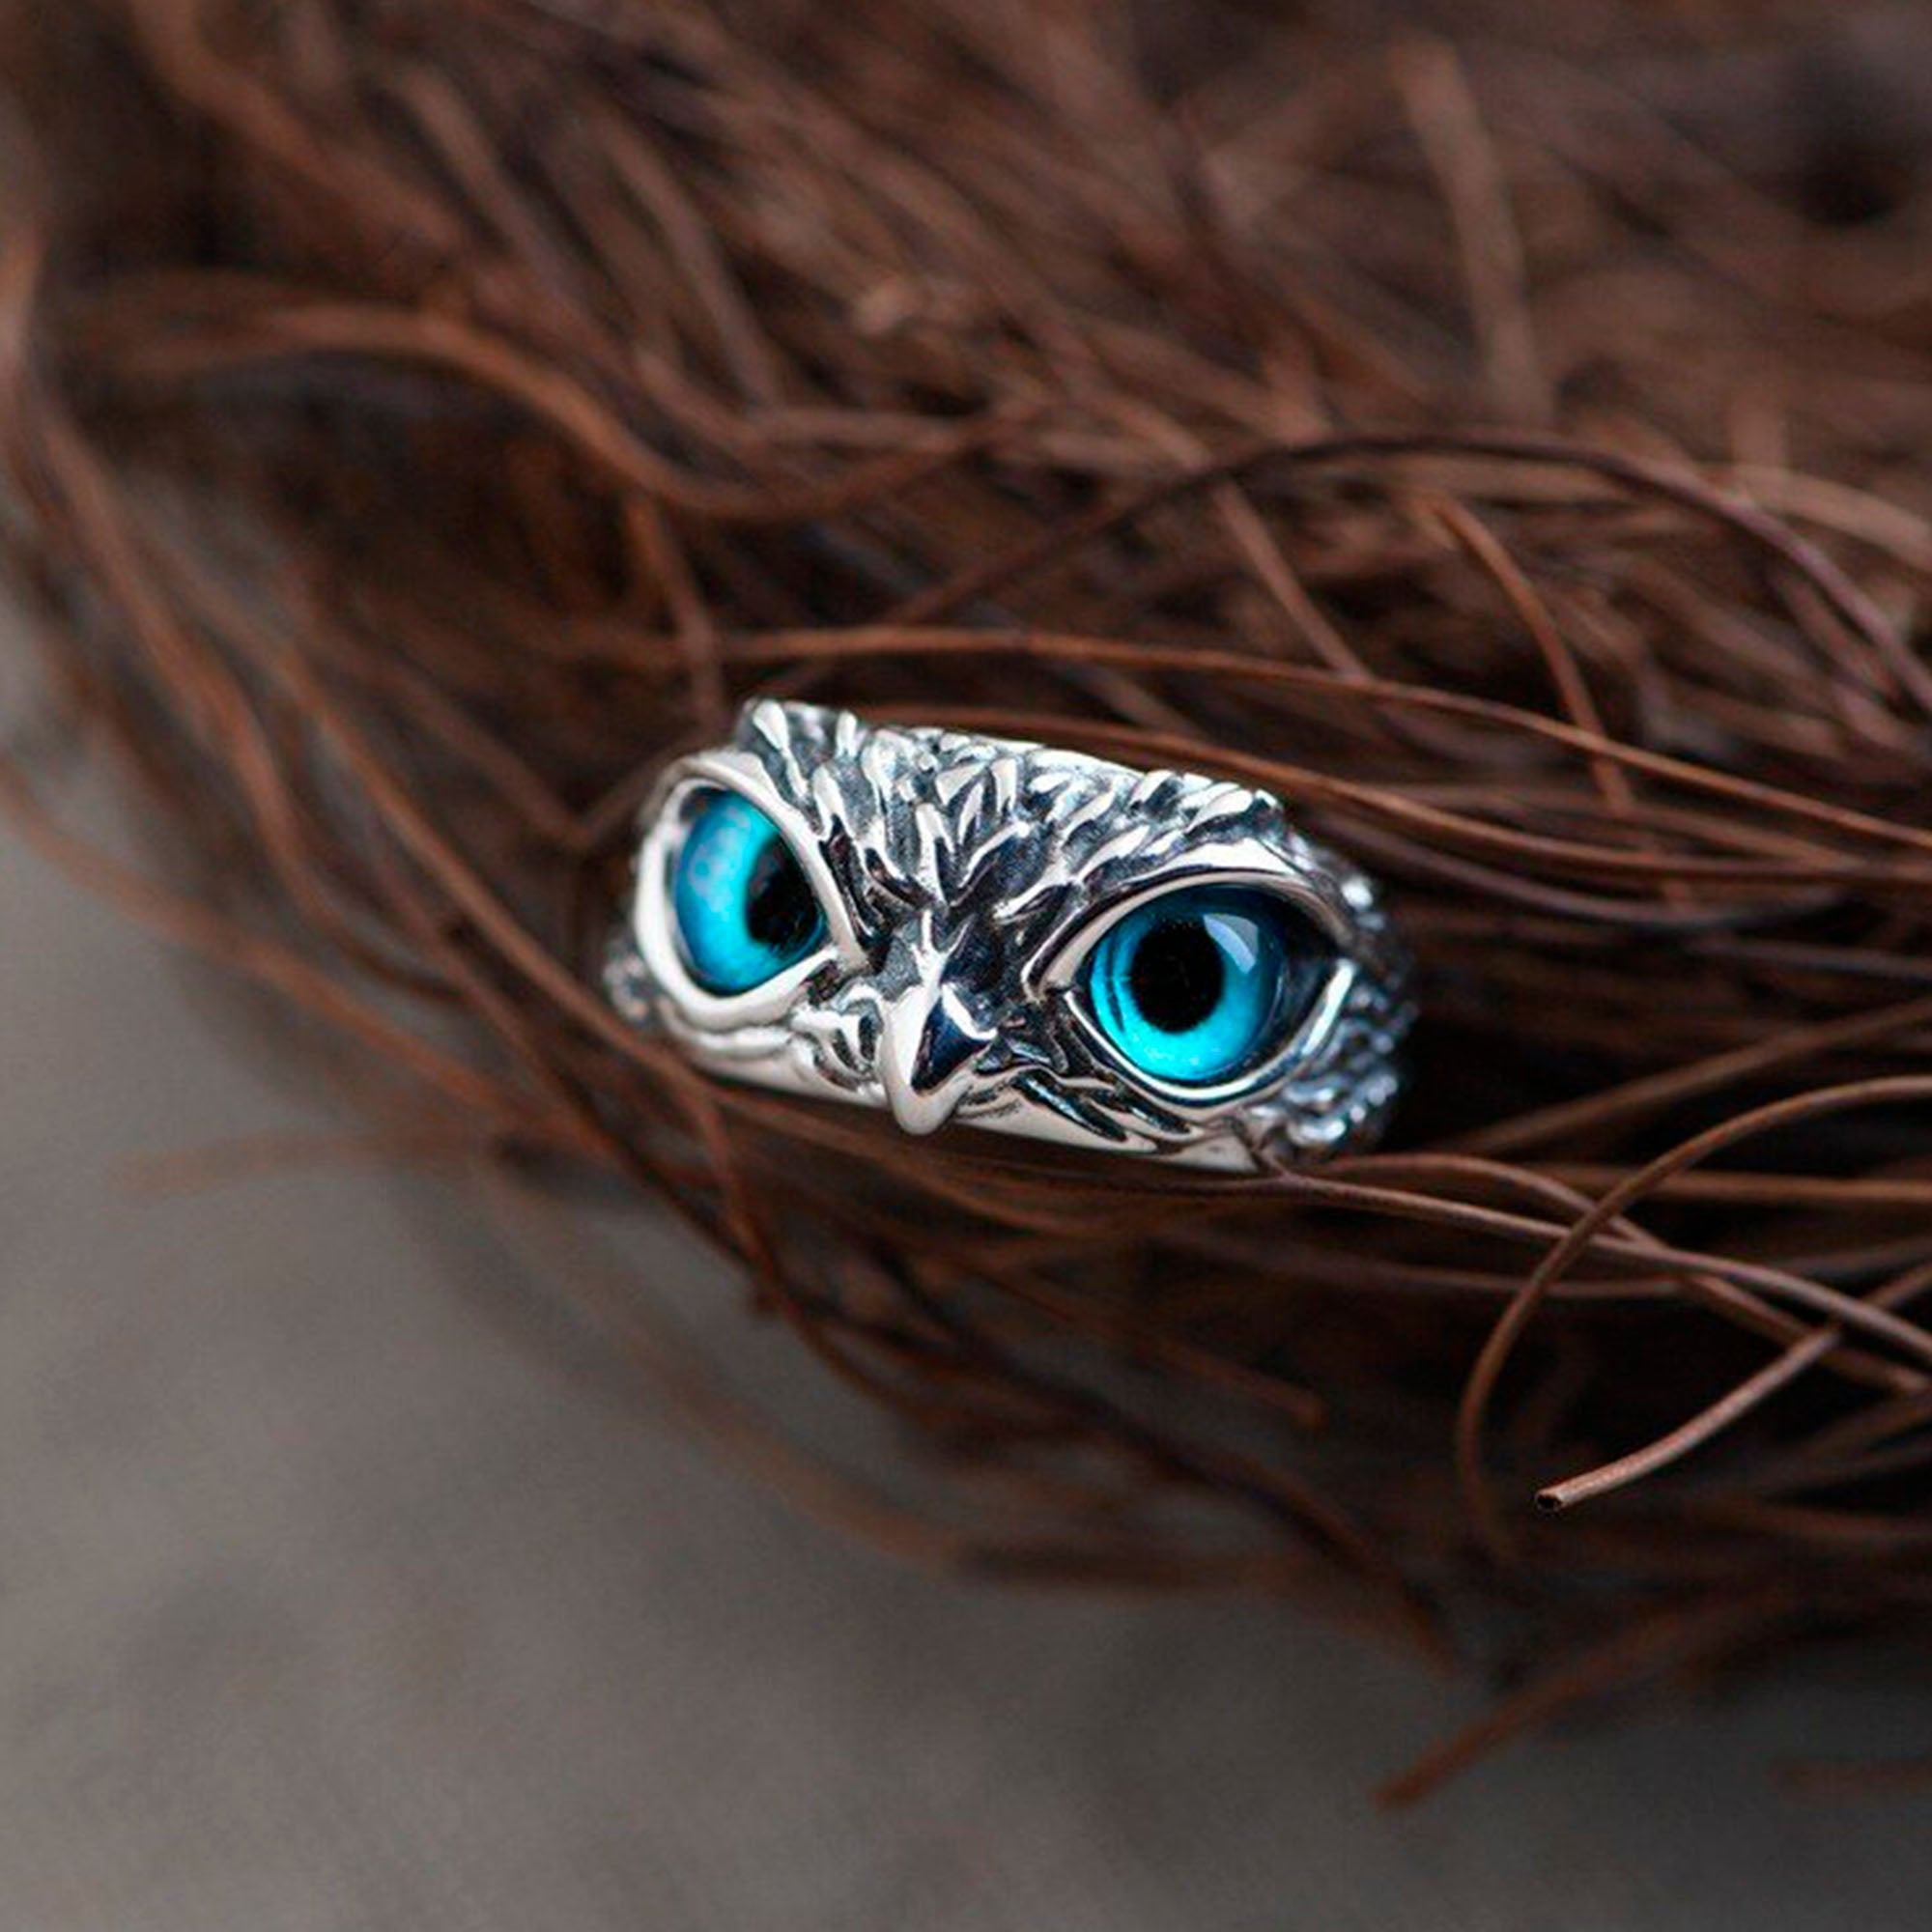 GUFY - Inelul intelepciunii cu ochi albastri